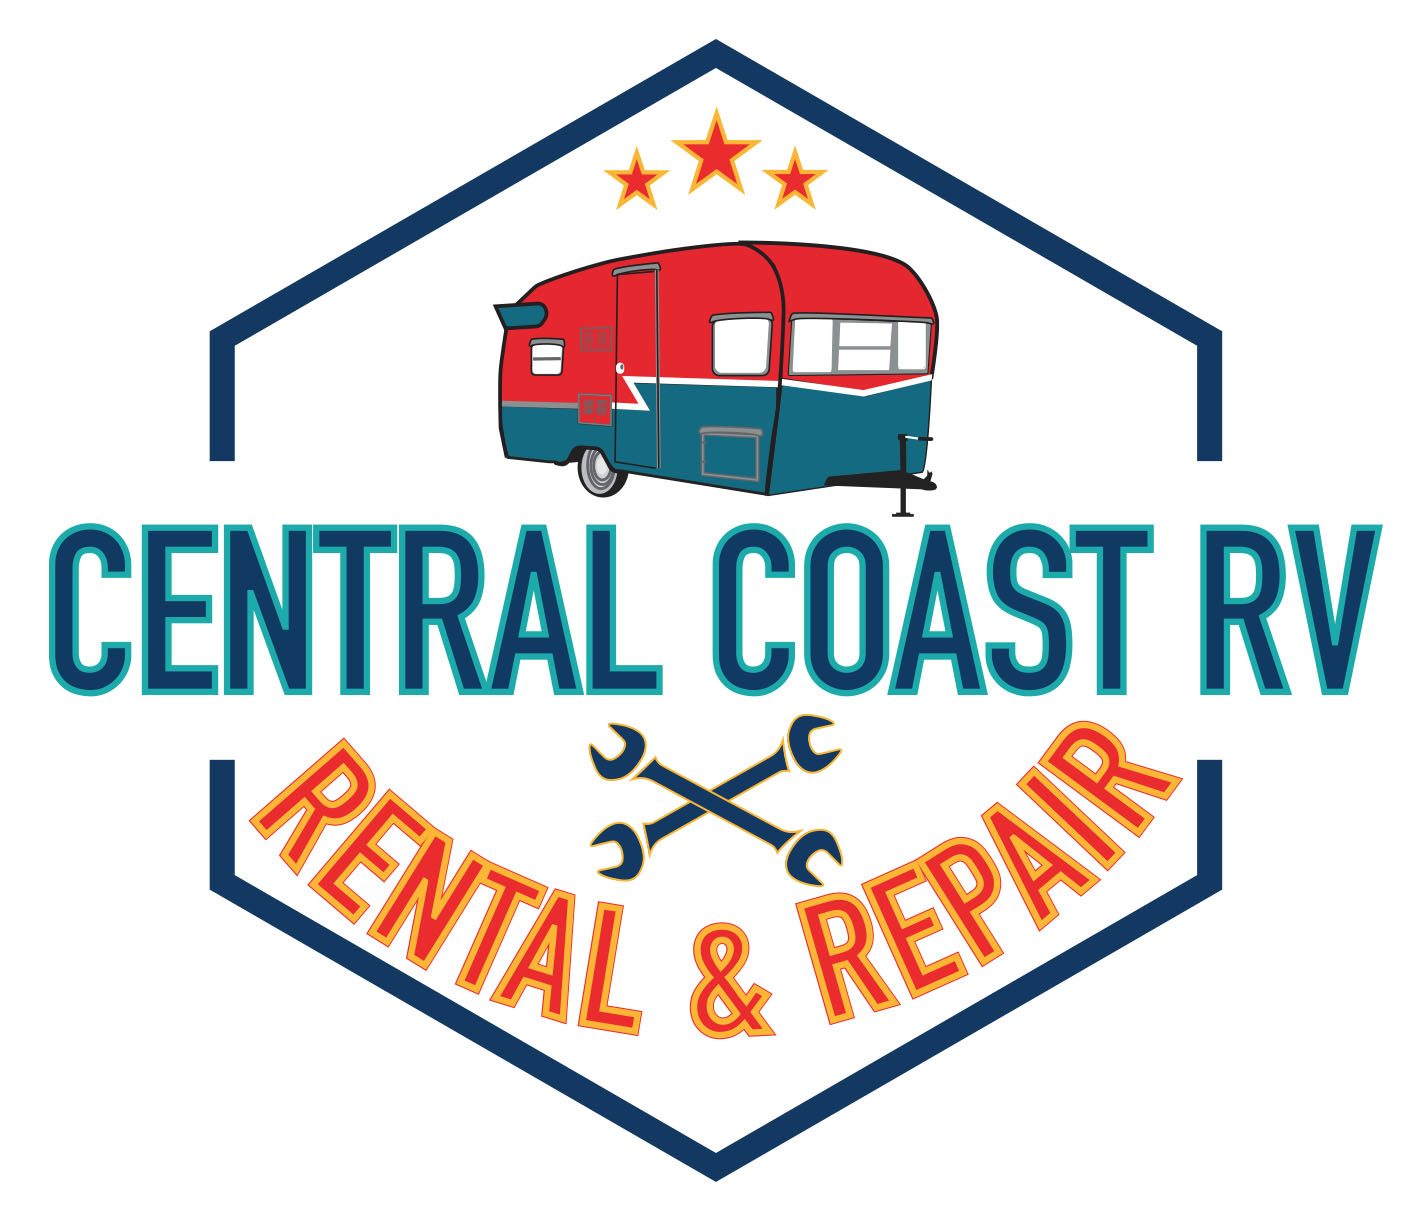 Central Coast RV Rental & Repair